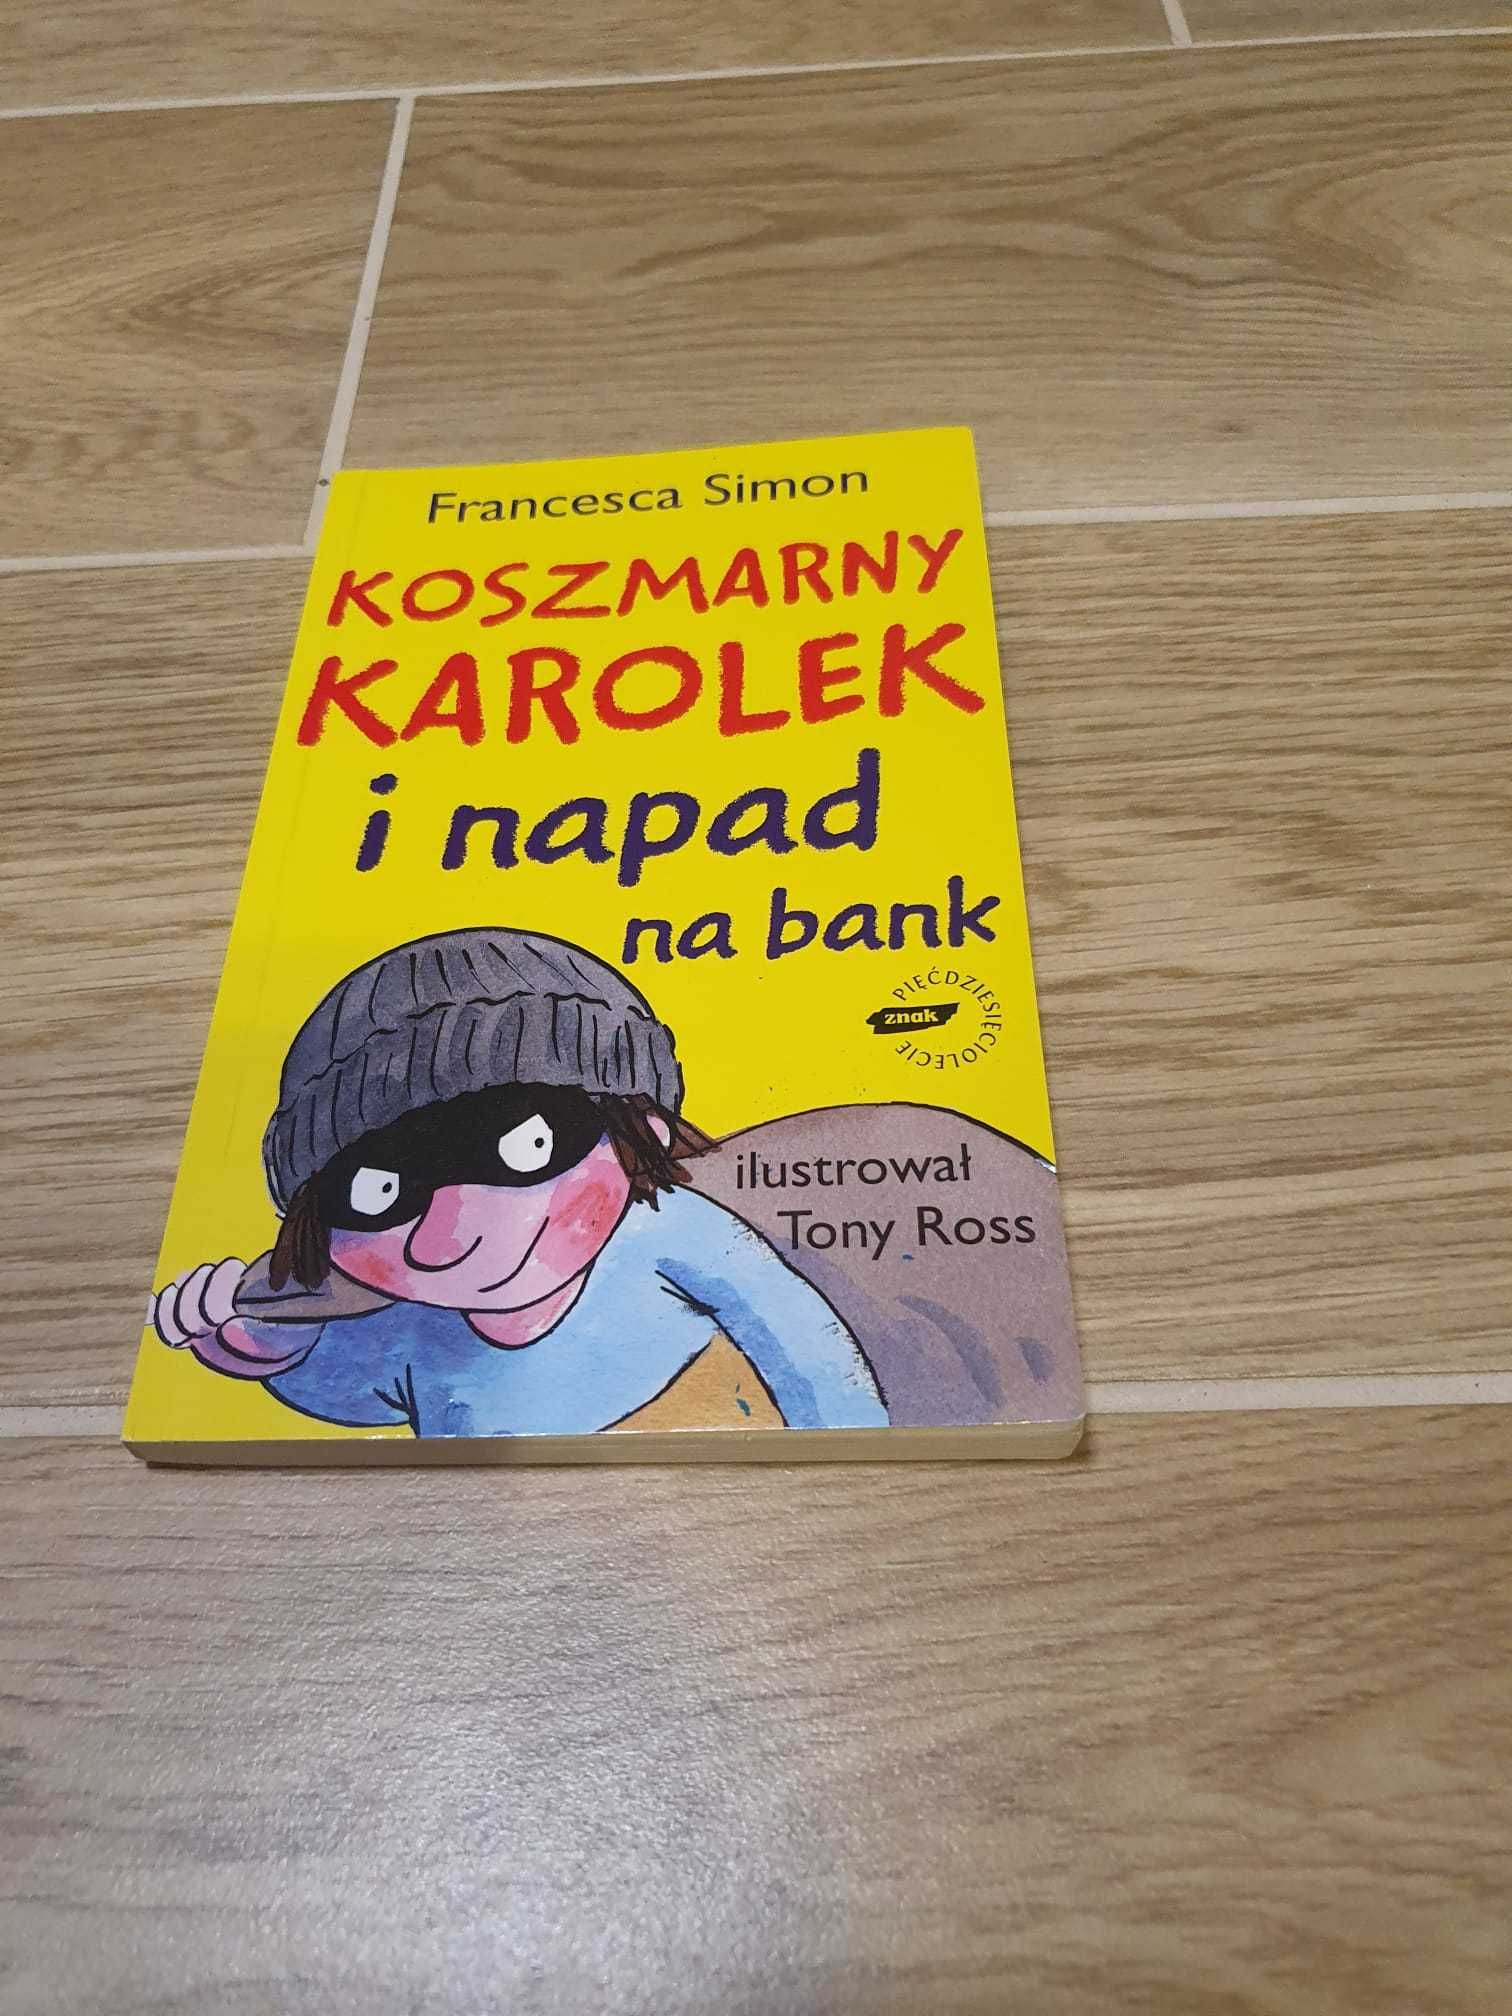 Francesca Simon Koszmarny Karolek i napad na bank